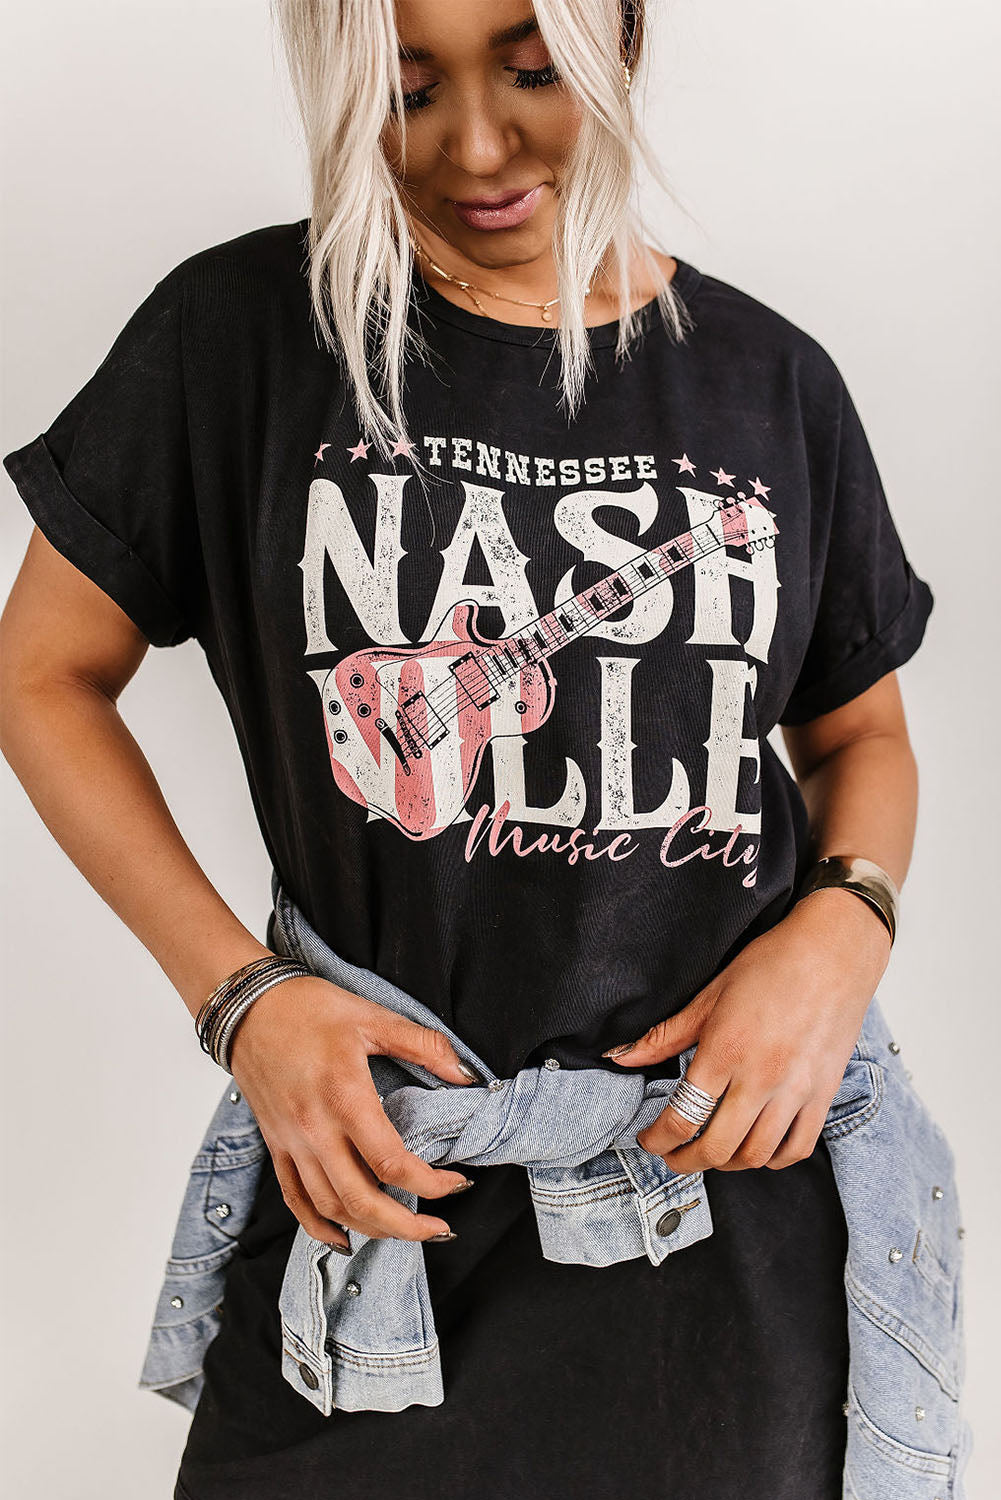 Black Nashville Music Festival Trending T-Shirt Dress T Shirt Dresses JT's Designer Fashion